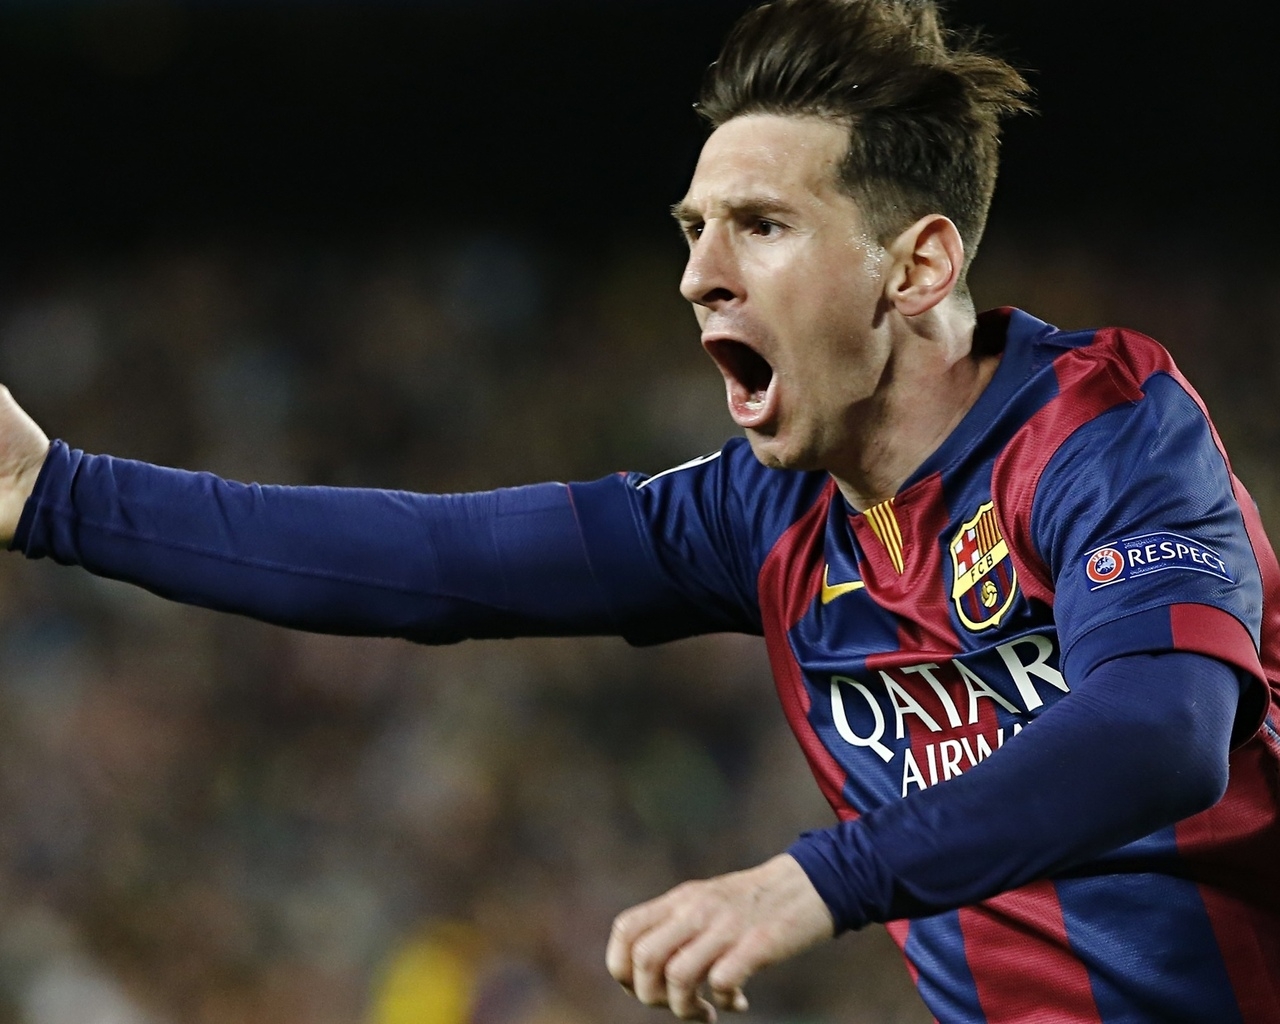 Lionel Messi Celebrating for 1280 x 1024 resolution